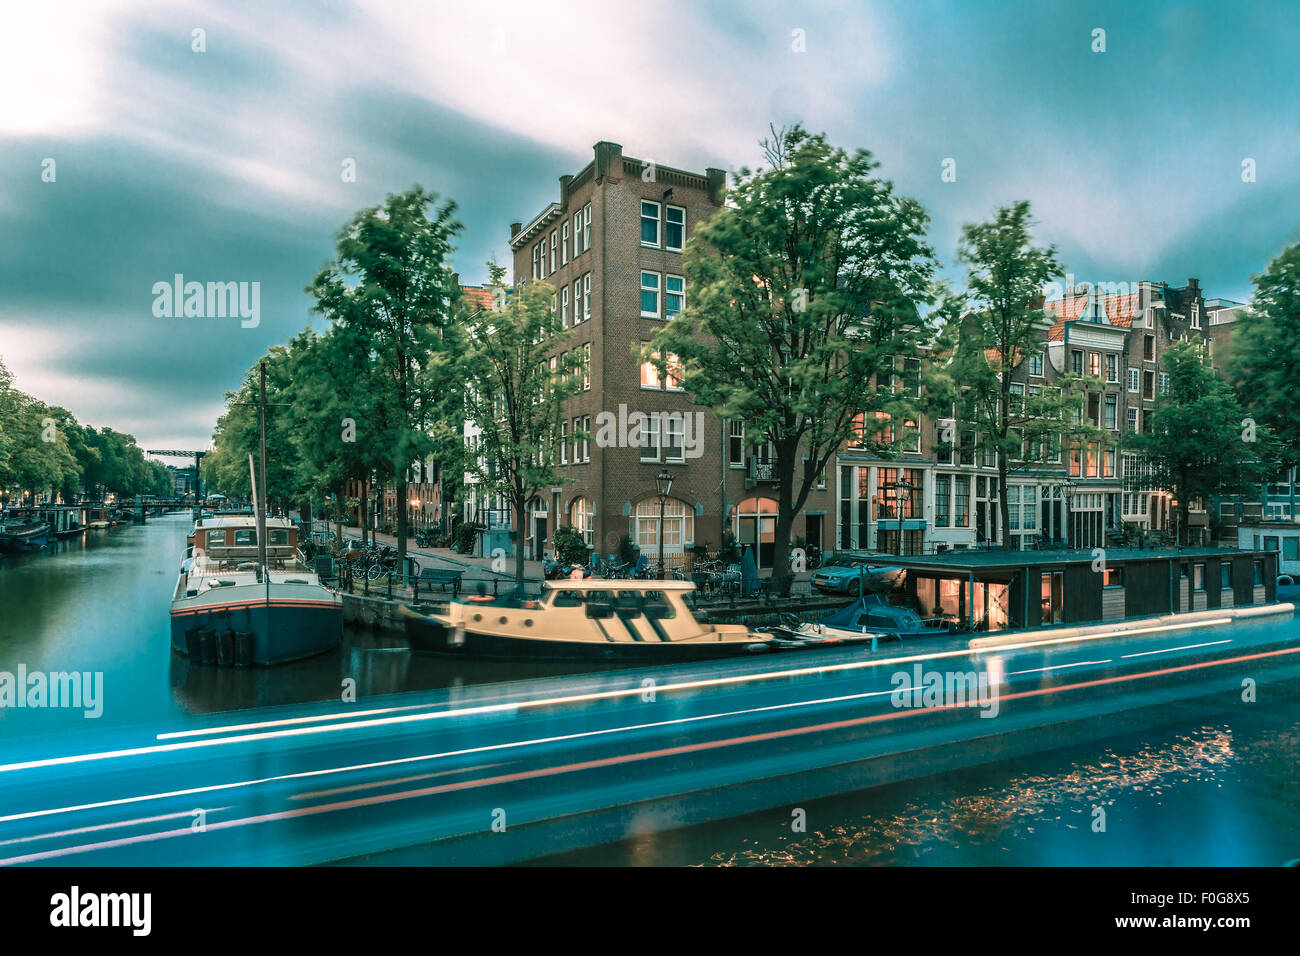 Notte Amsterdam canal e luminosa via Foto Stock